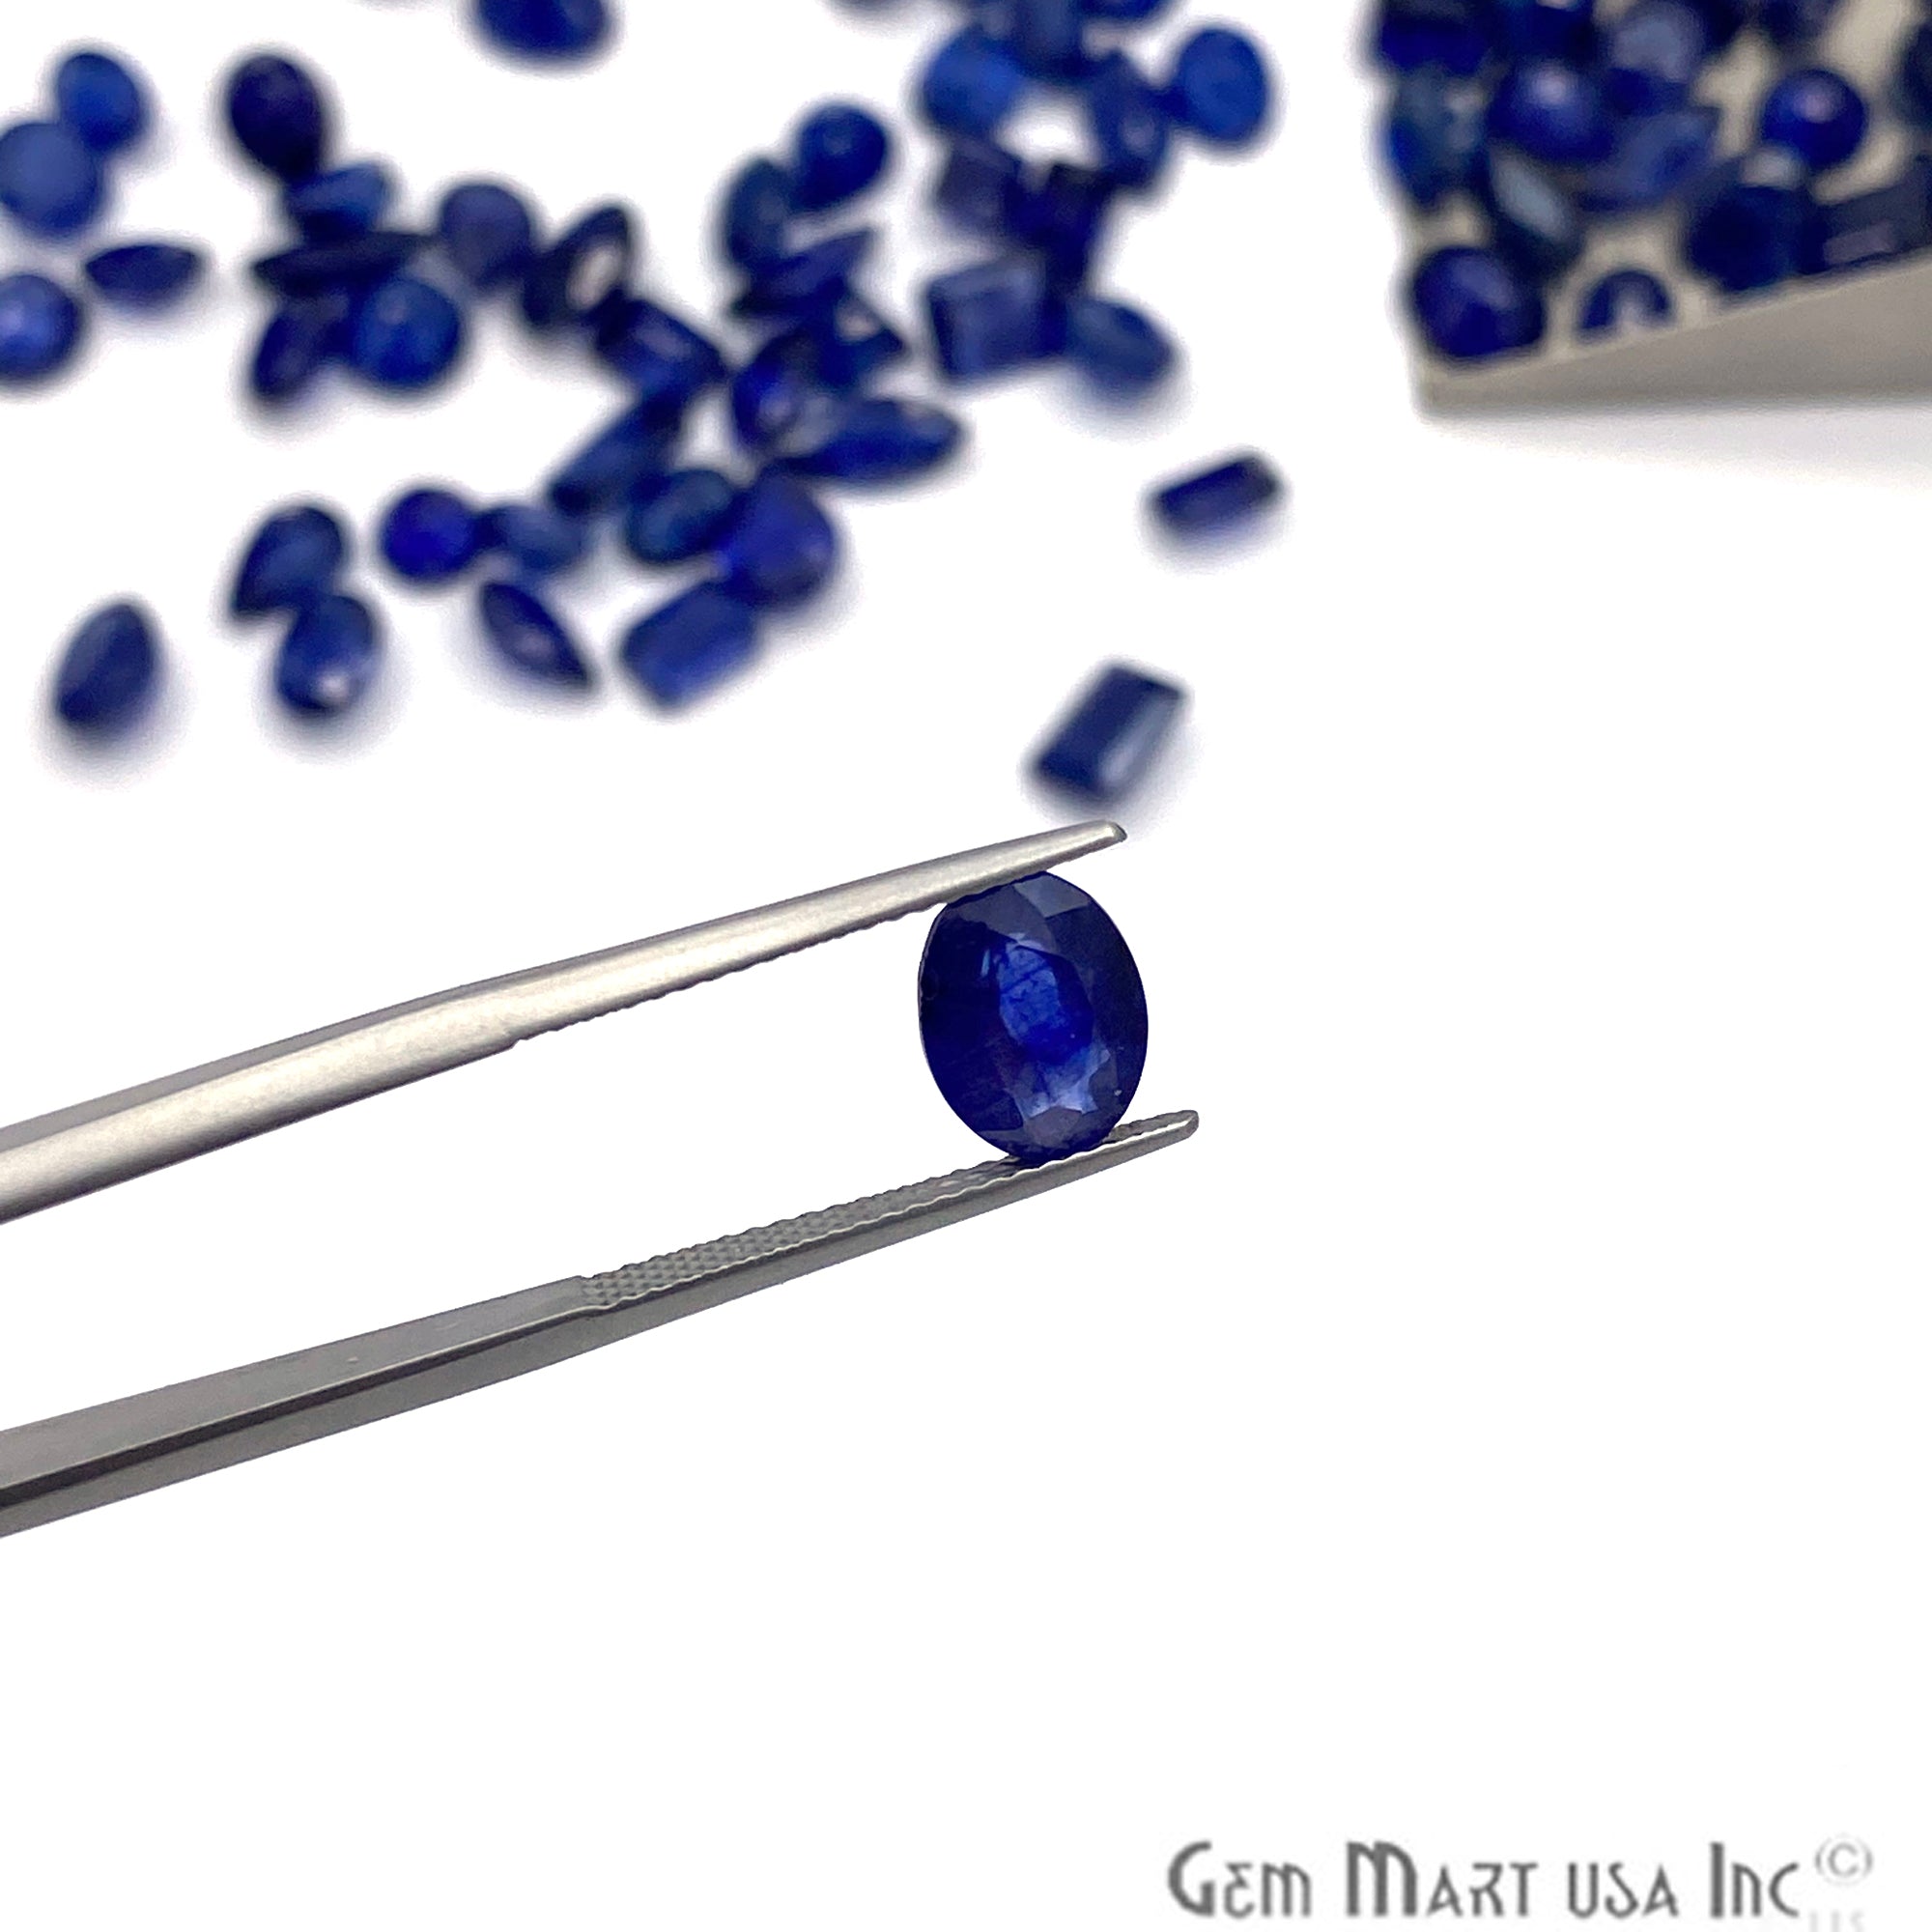 10 Carat Sapphire Gemstone Mix Shaped Lot Precious Loose Gems - GemMartUSA